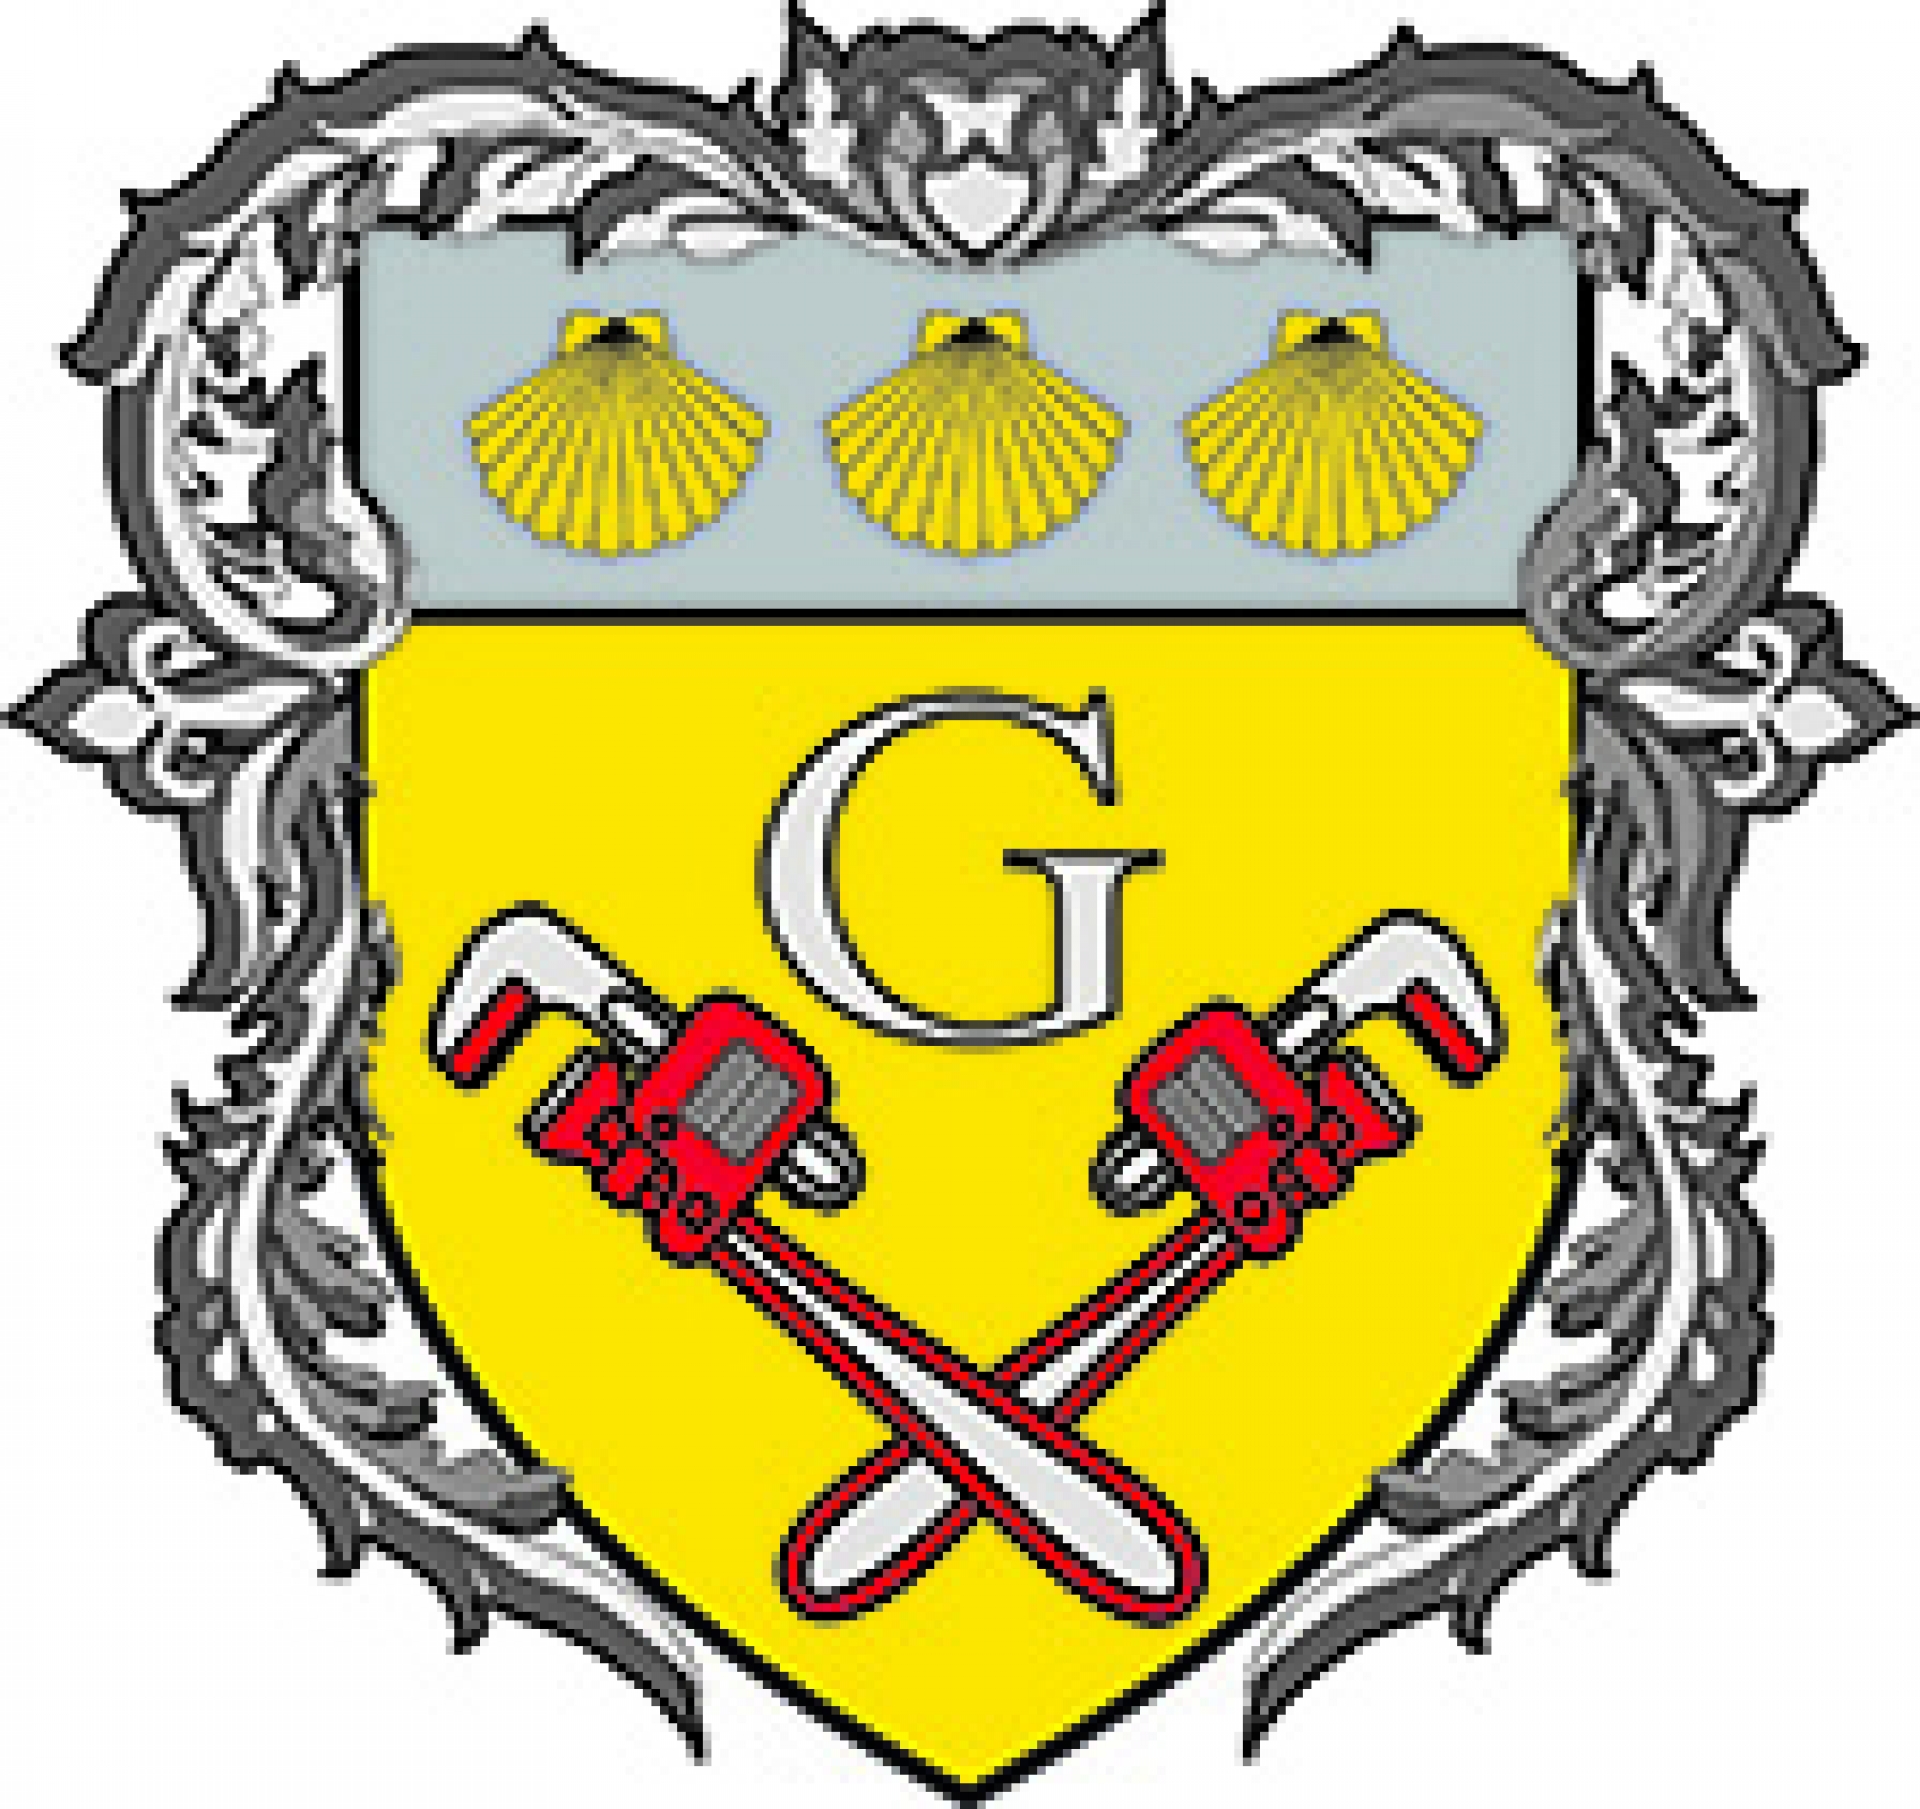 Graham Plumbing company logo